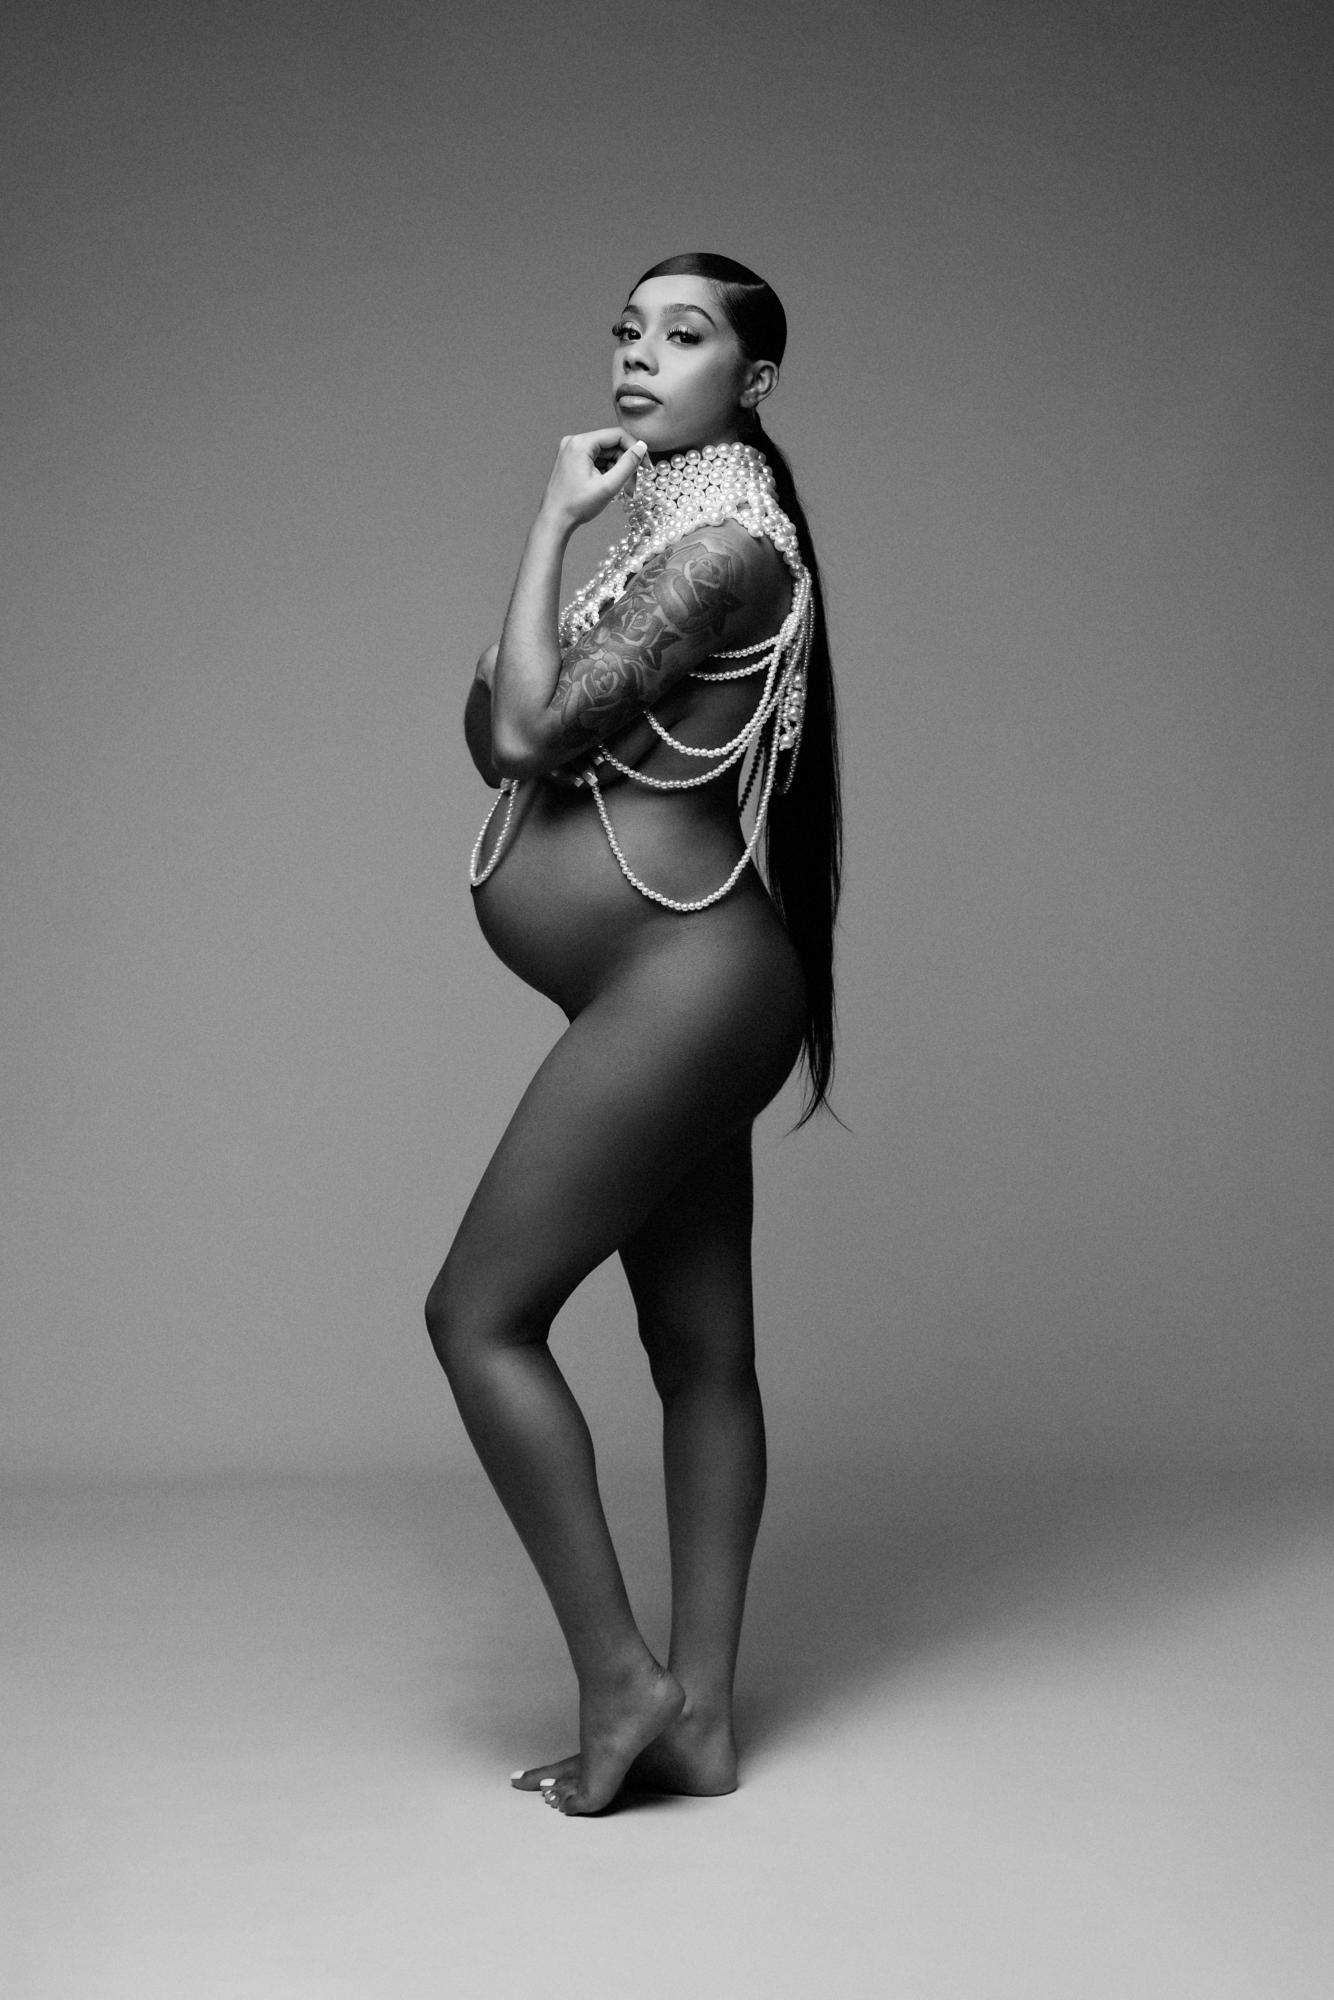 Artistic nude maternity photography Birmingham, best maternity photoshoot